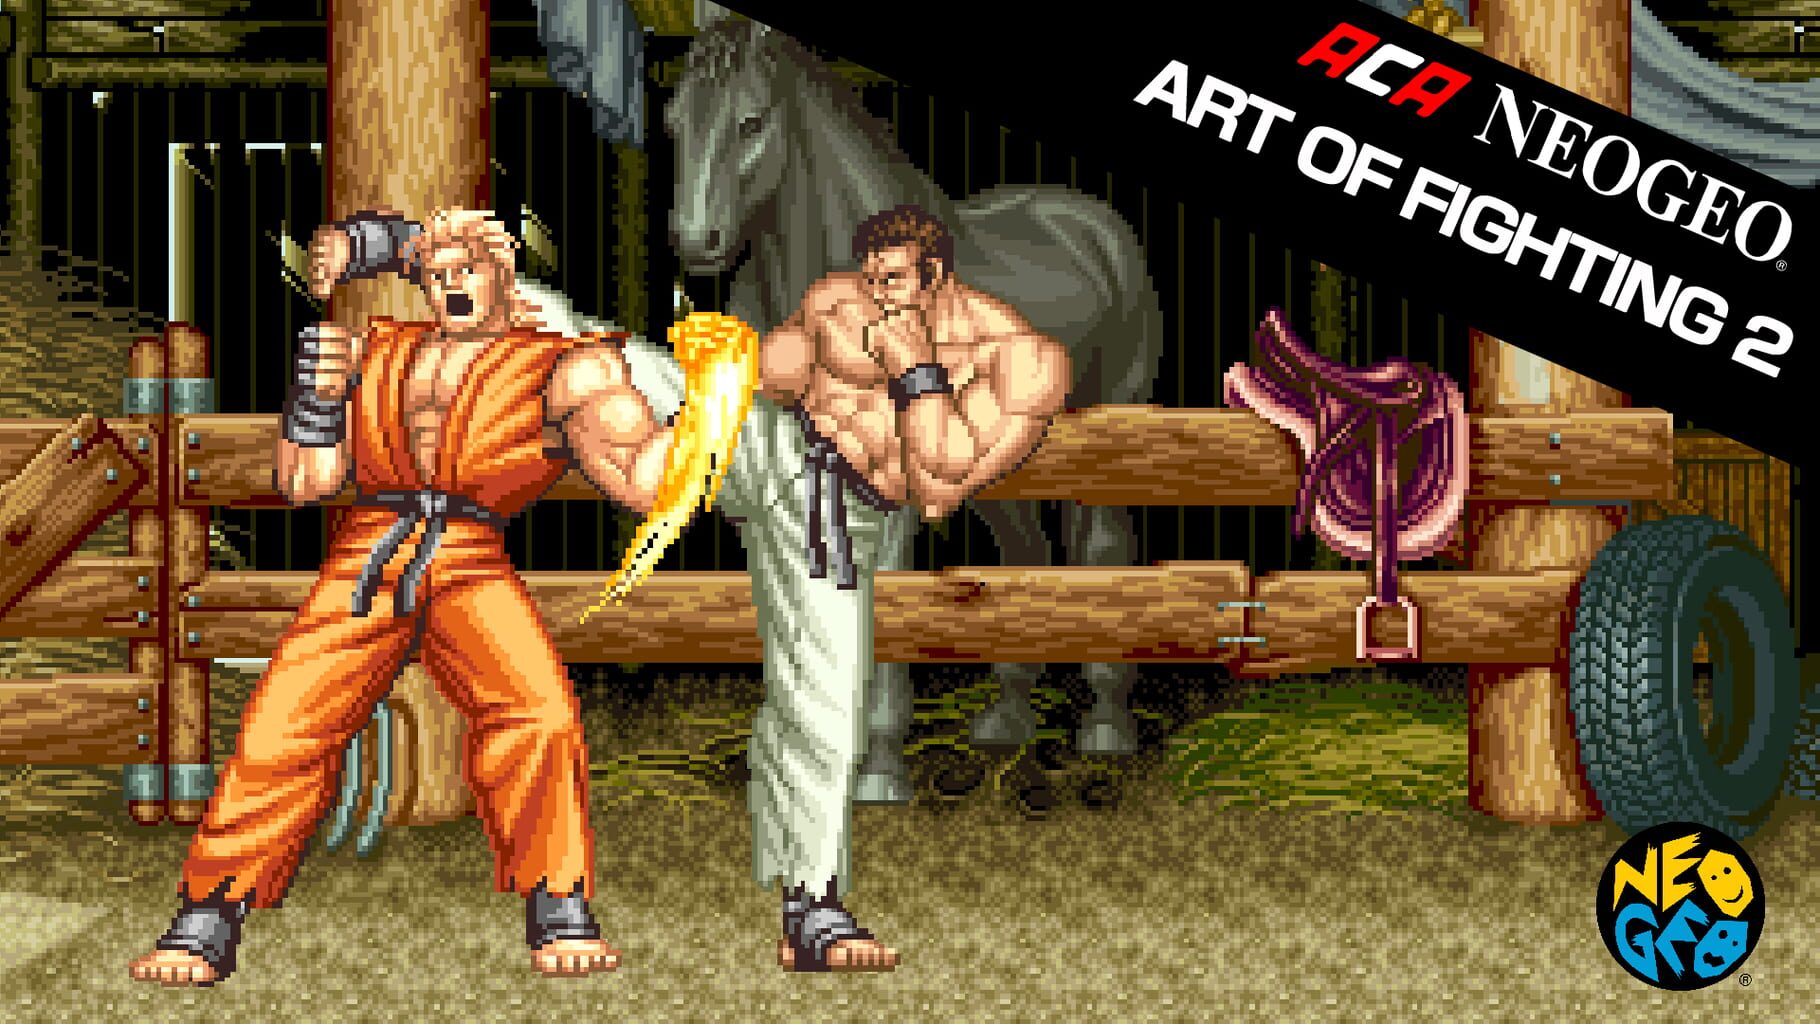 ACA Neo Geo: Art of Fighting 2 artwork